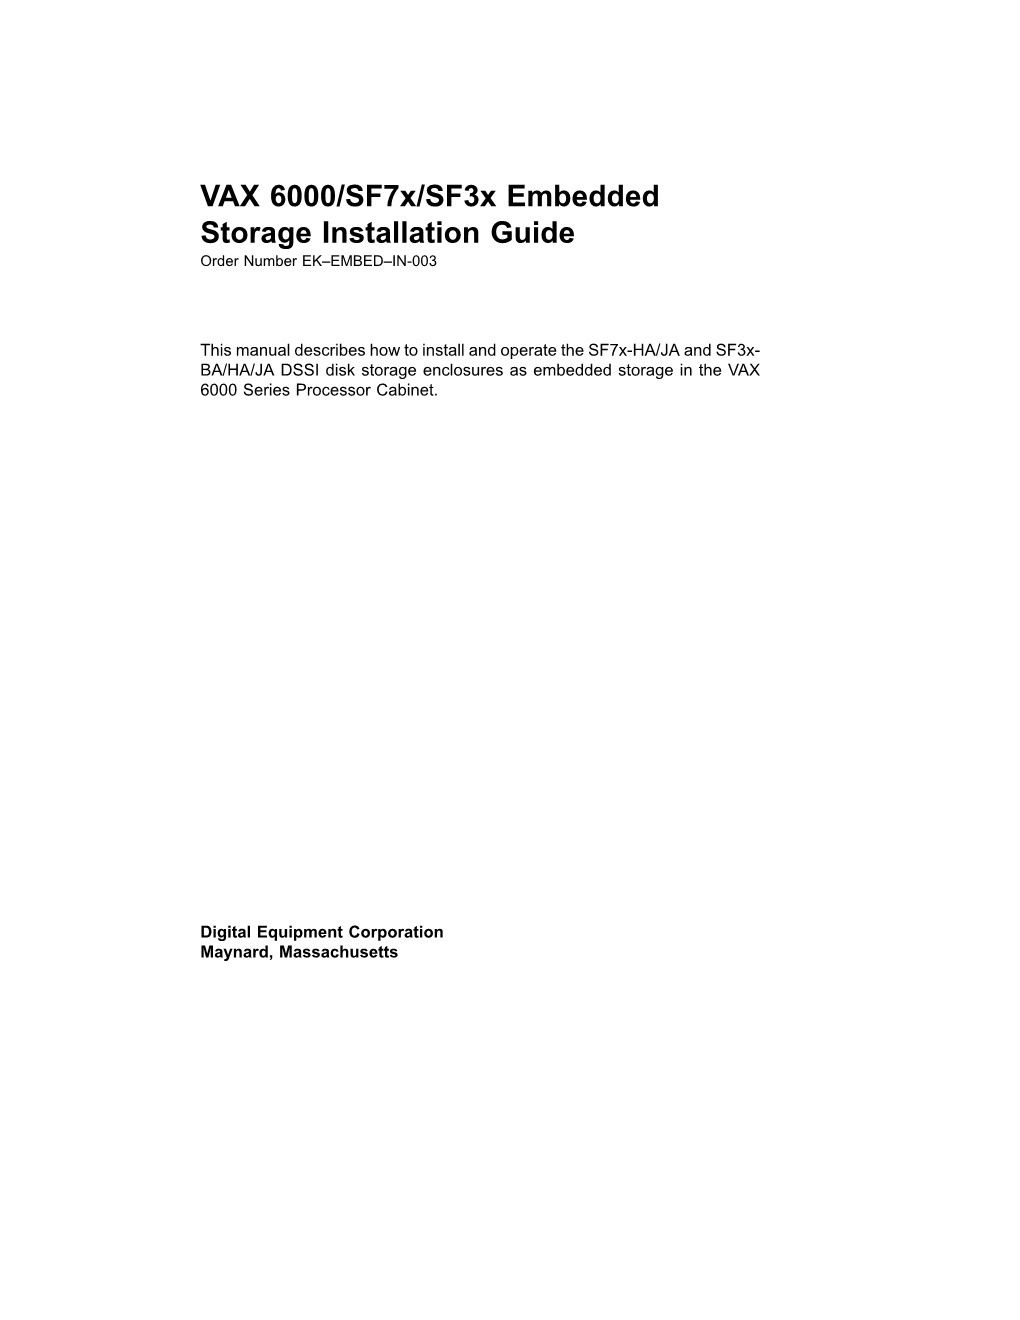 VAX 6000/Sf7x/Sf3x Embedded Storage Installation Guide Order Number EK–EMBED–IN-003